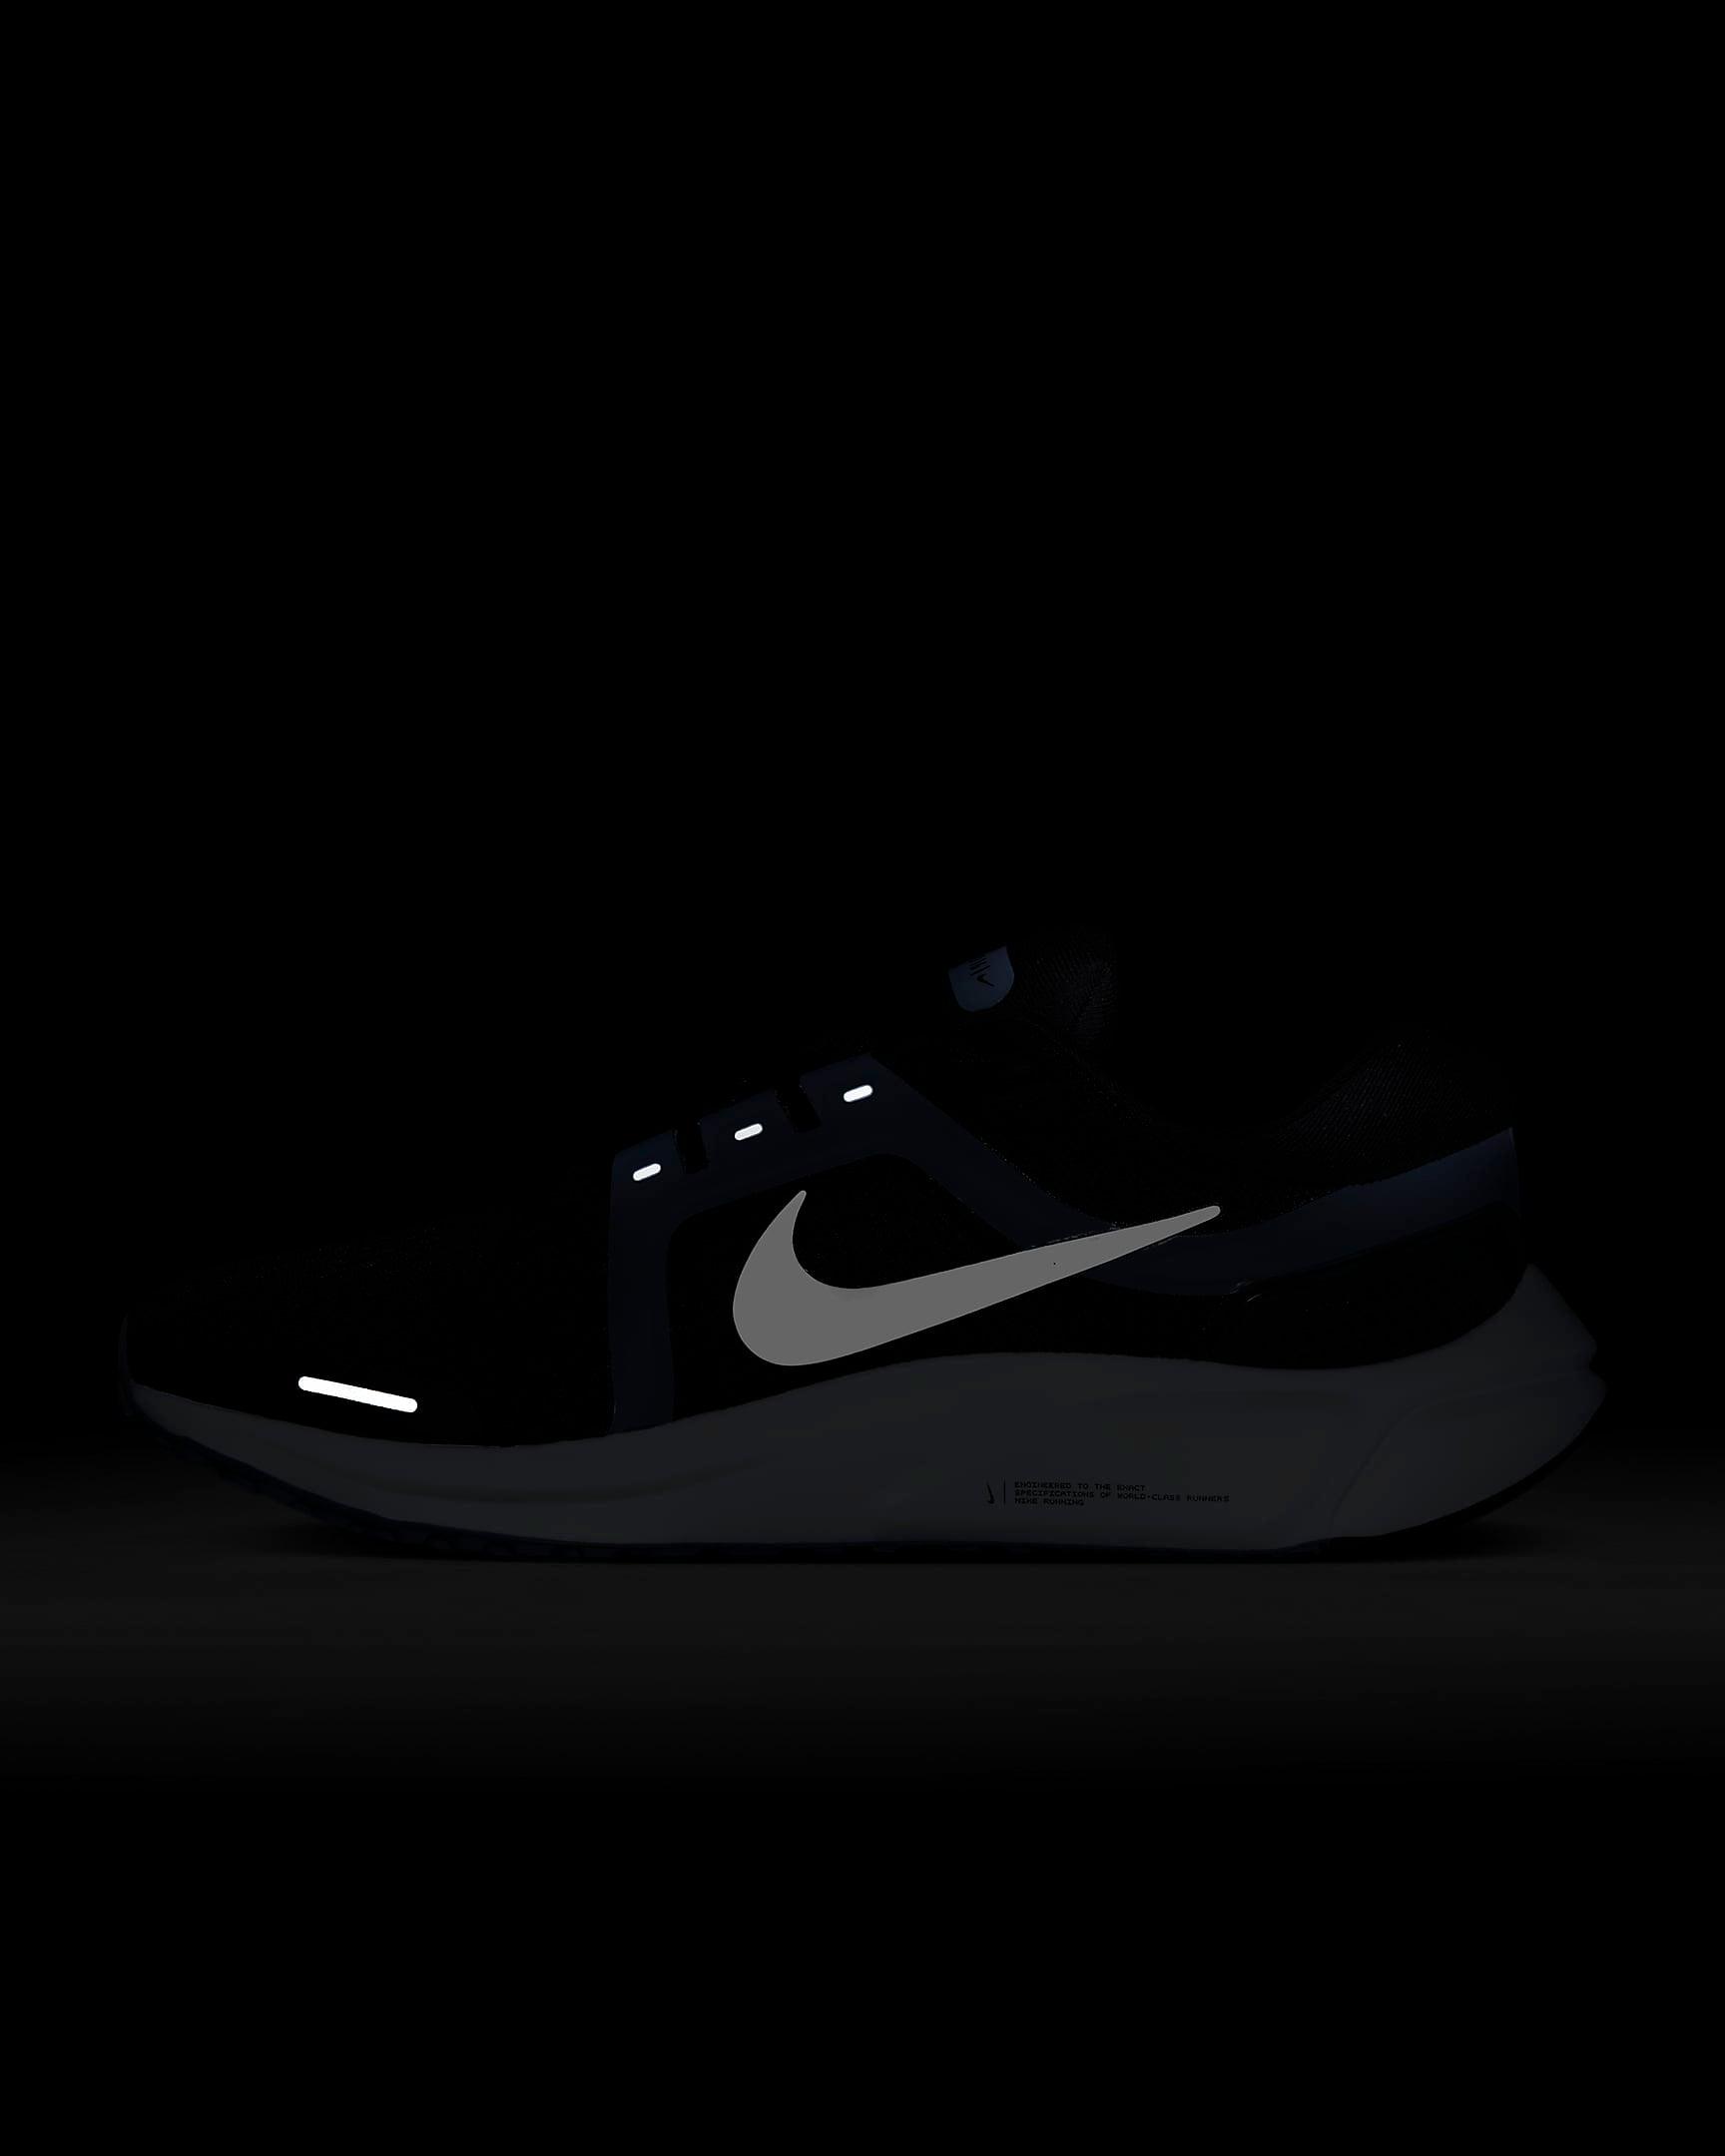 Giày Nike Vomero 16 Men Shoes #Ashen Slate - Kallos Vietnam